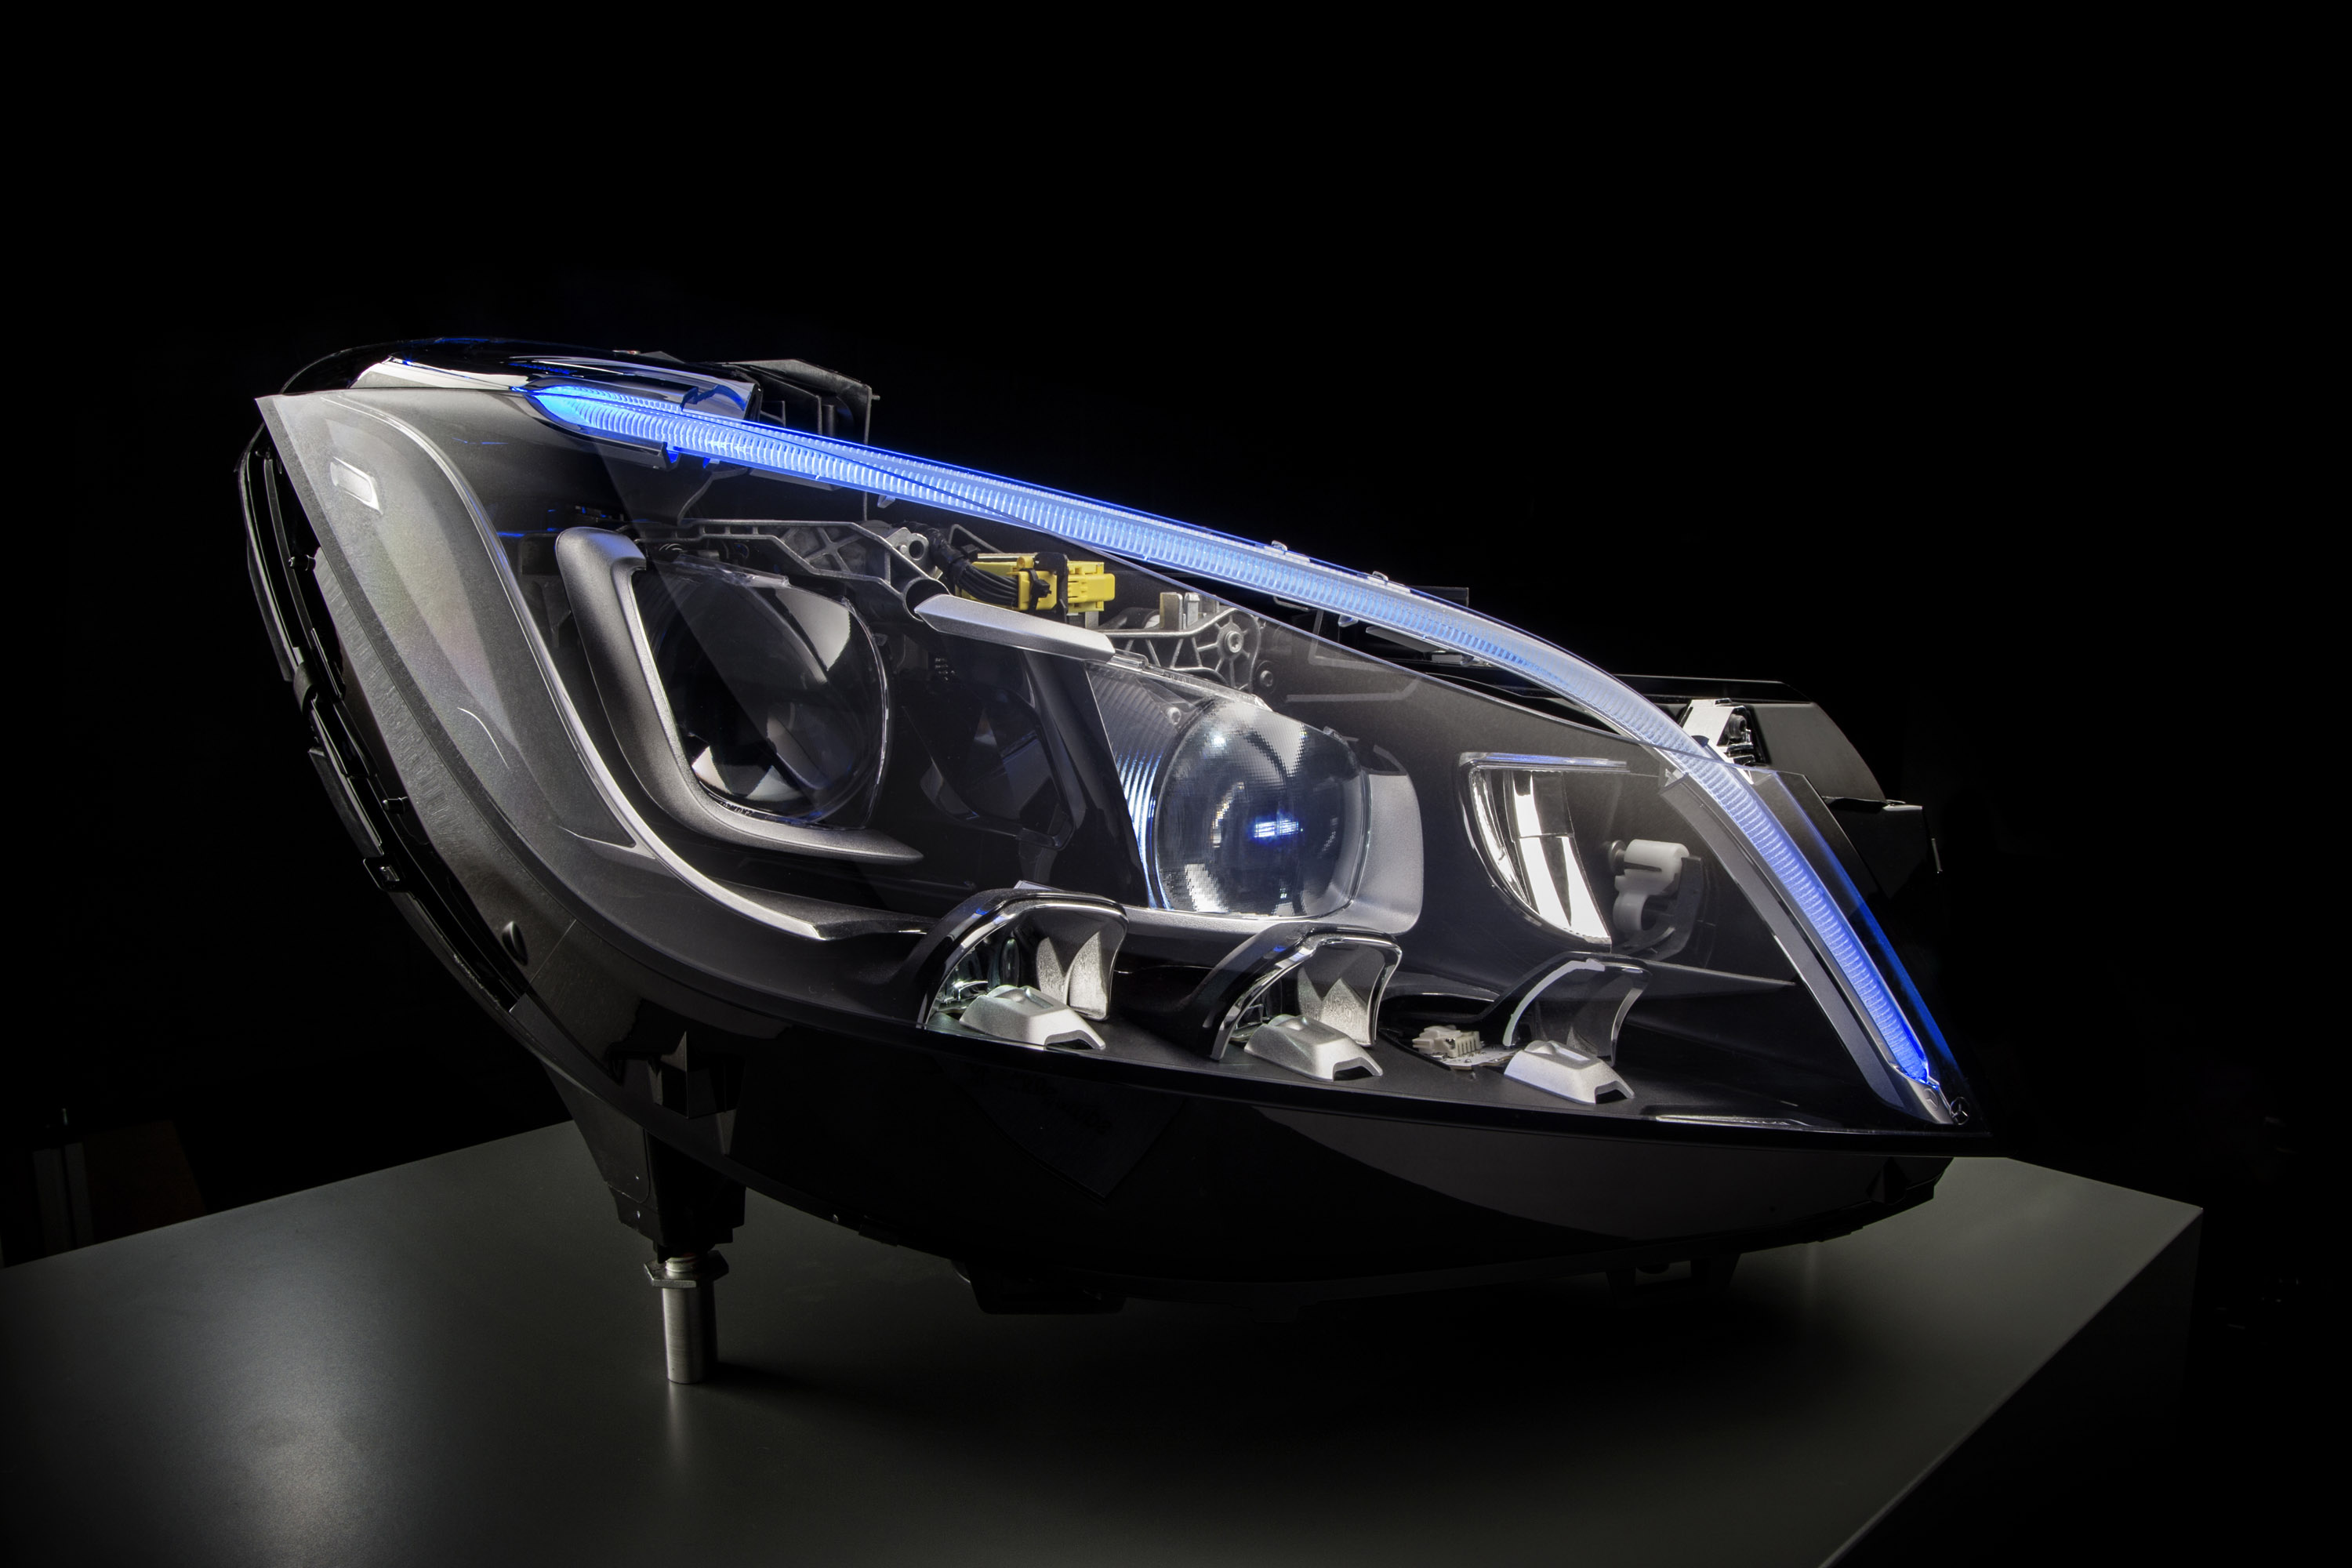 Mercedes-Benz MULTIBEAM LED headlamps